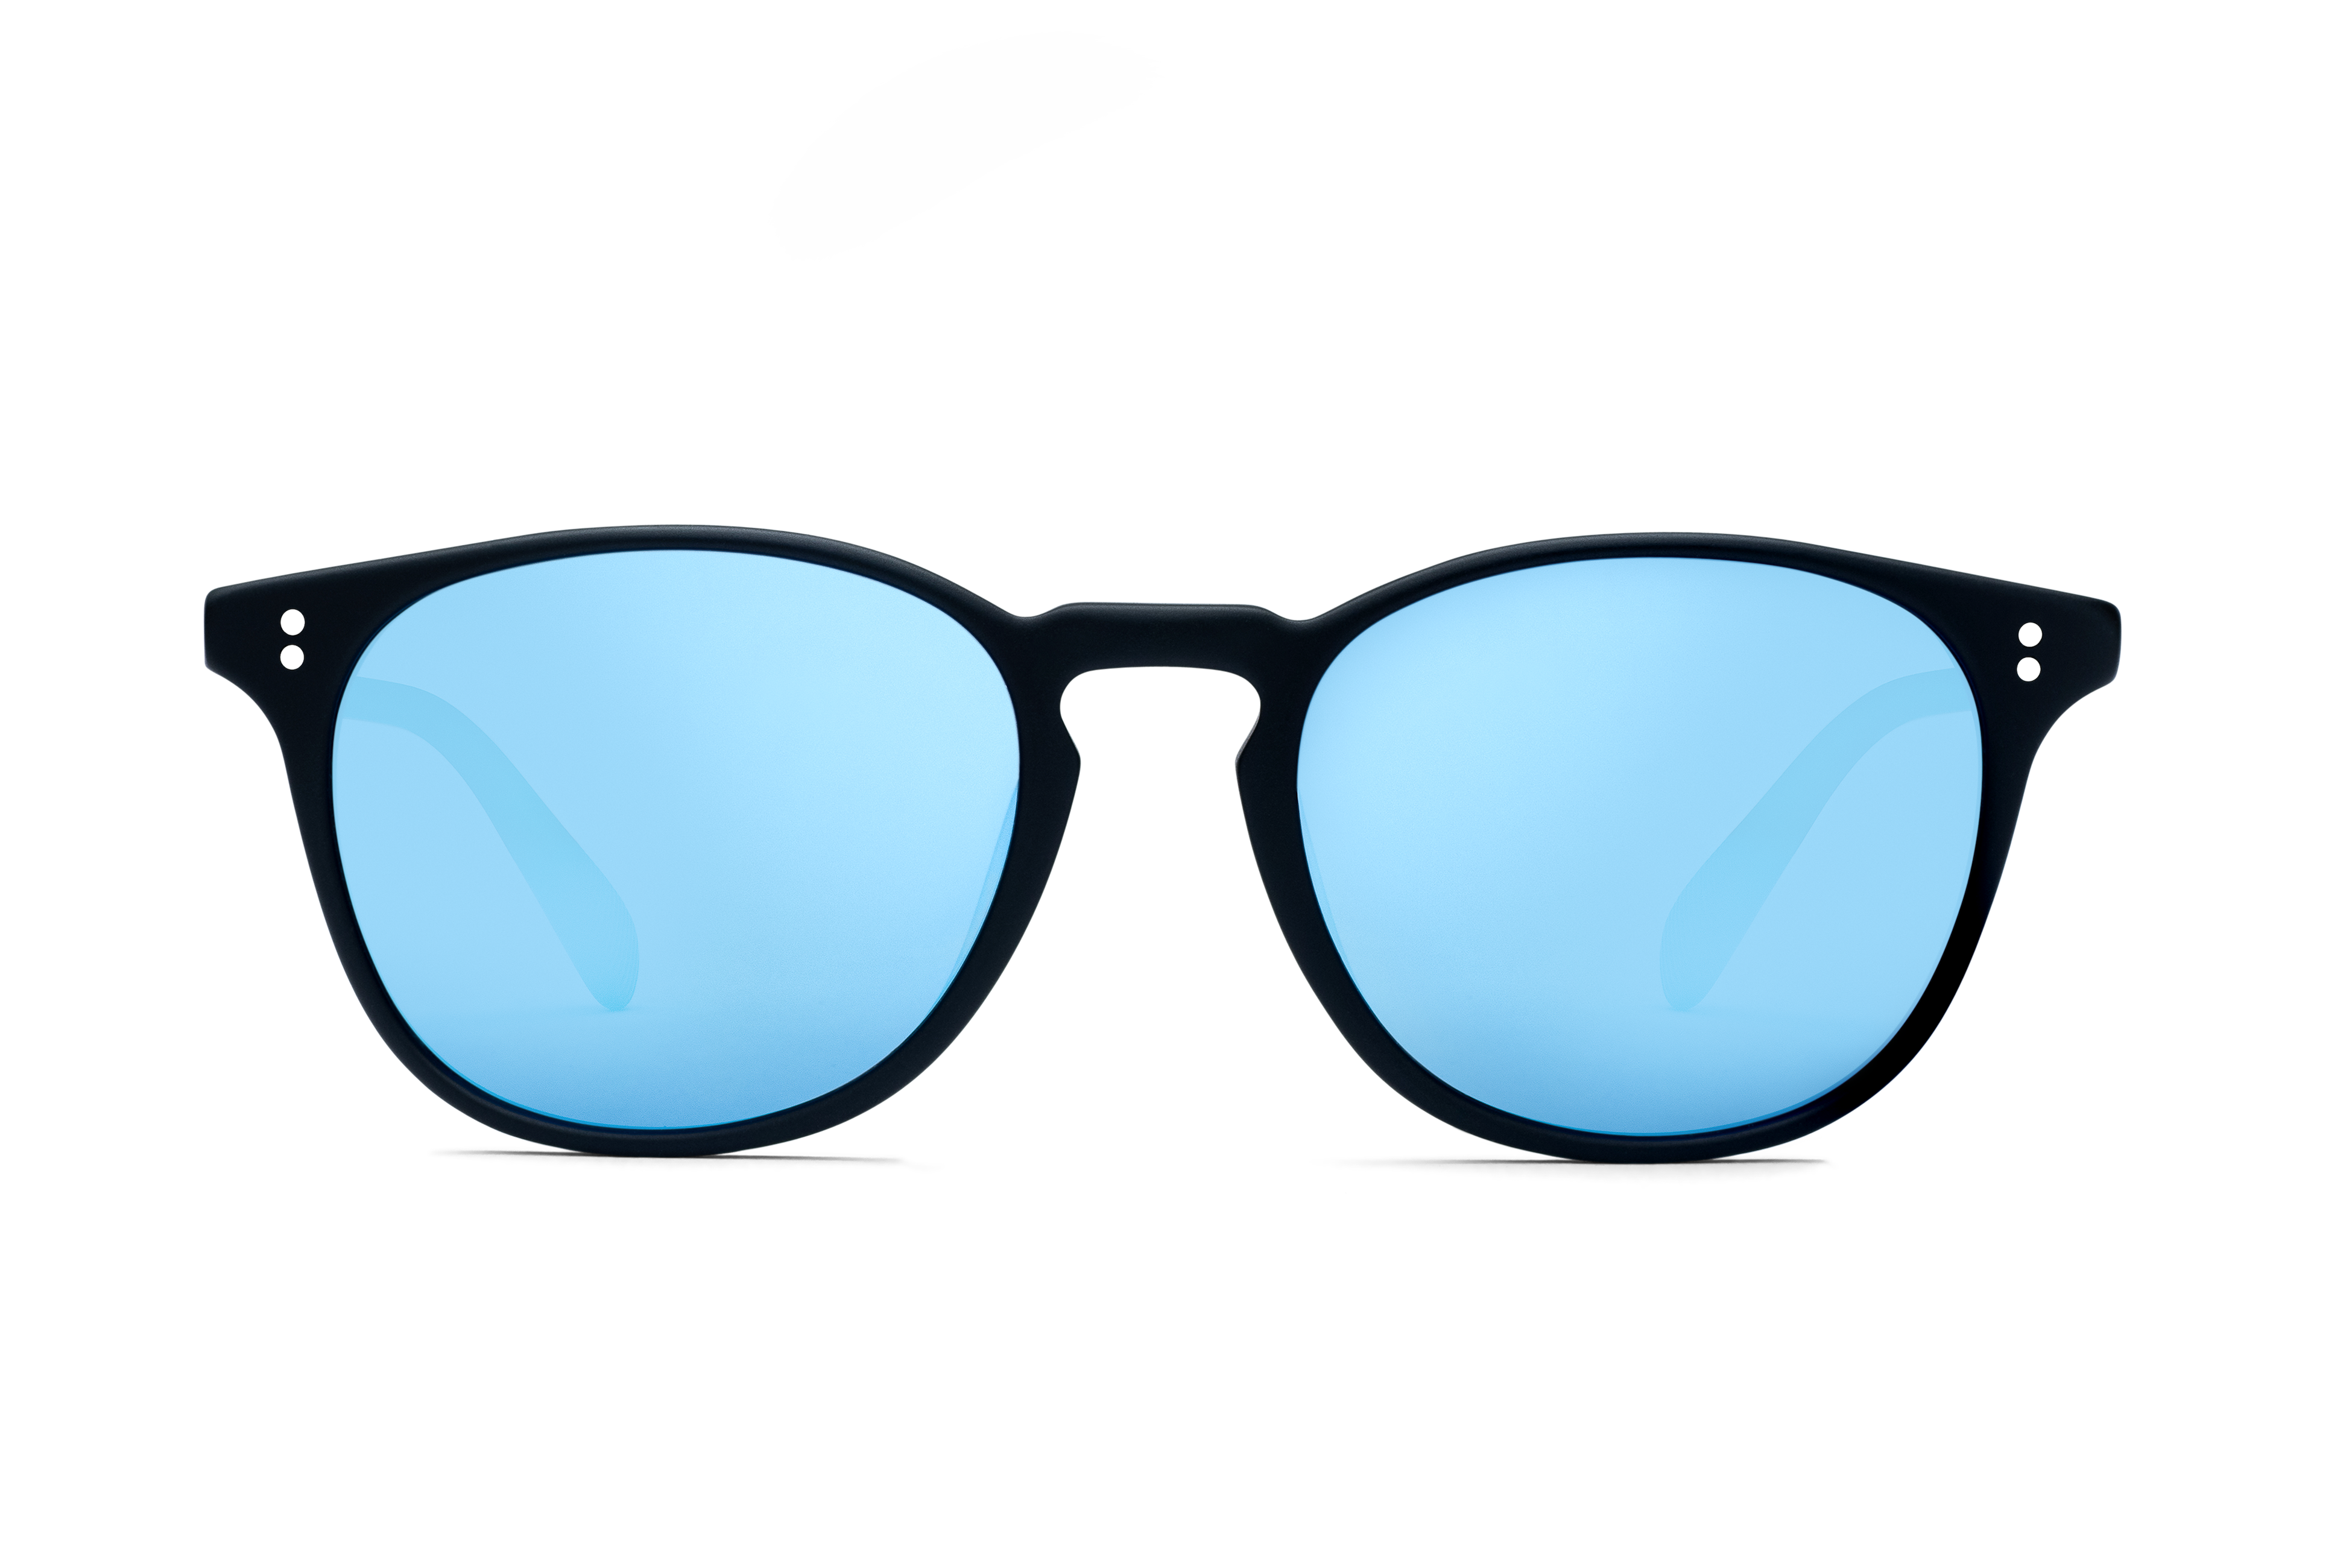 Rocket Eyewear MTO P3 Classic Matte Black with Blue Mirrored Polarized Lenses